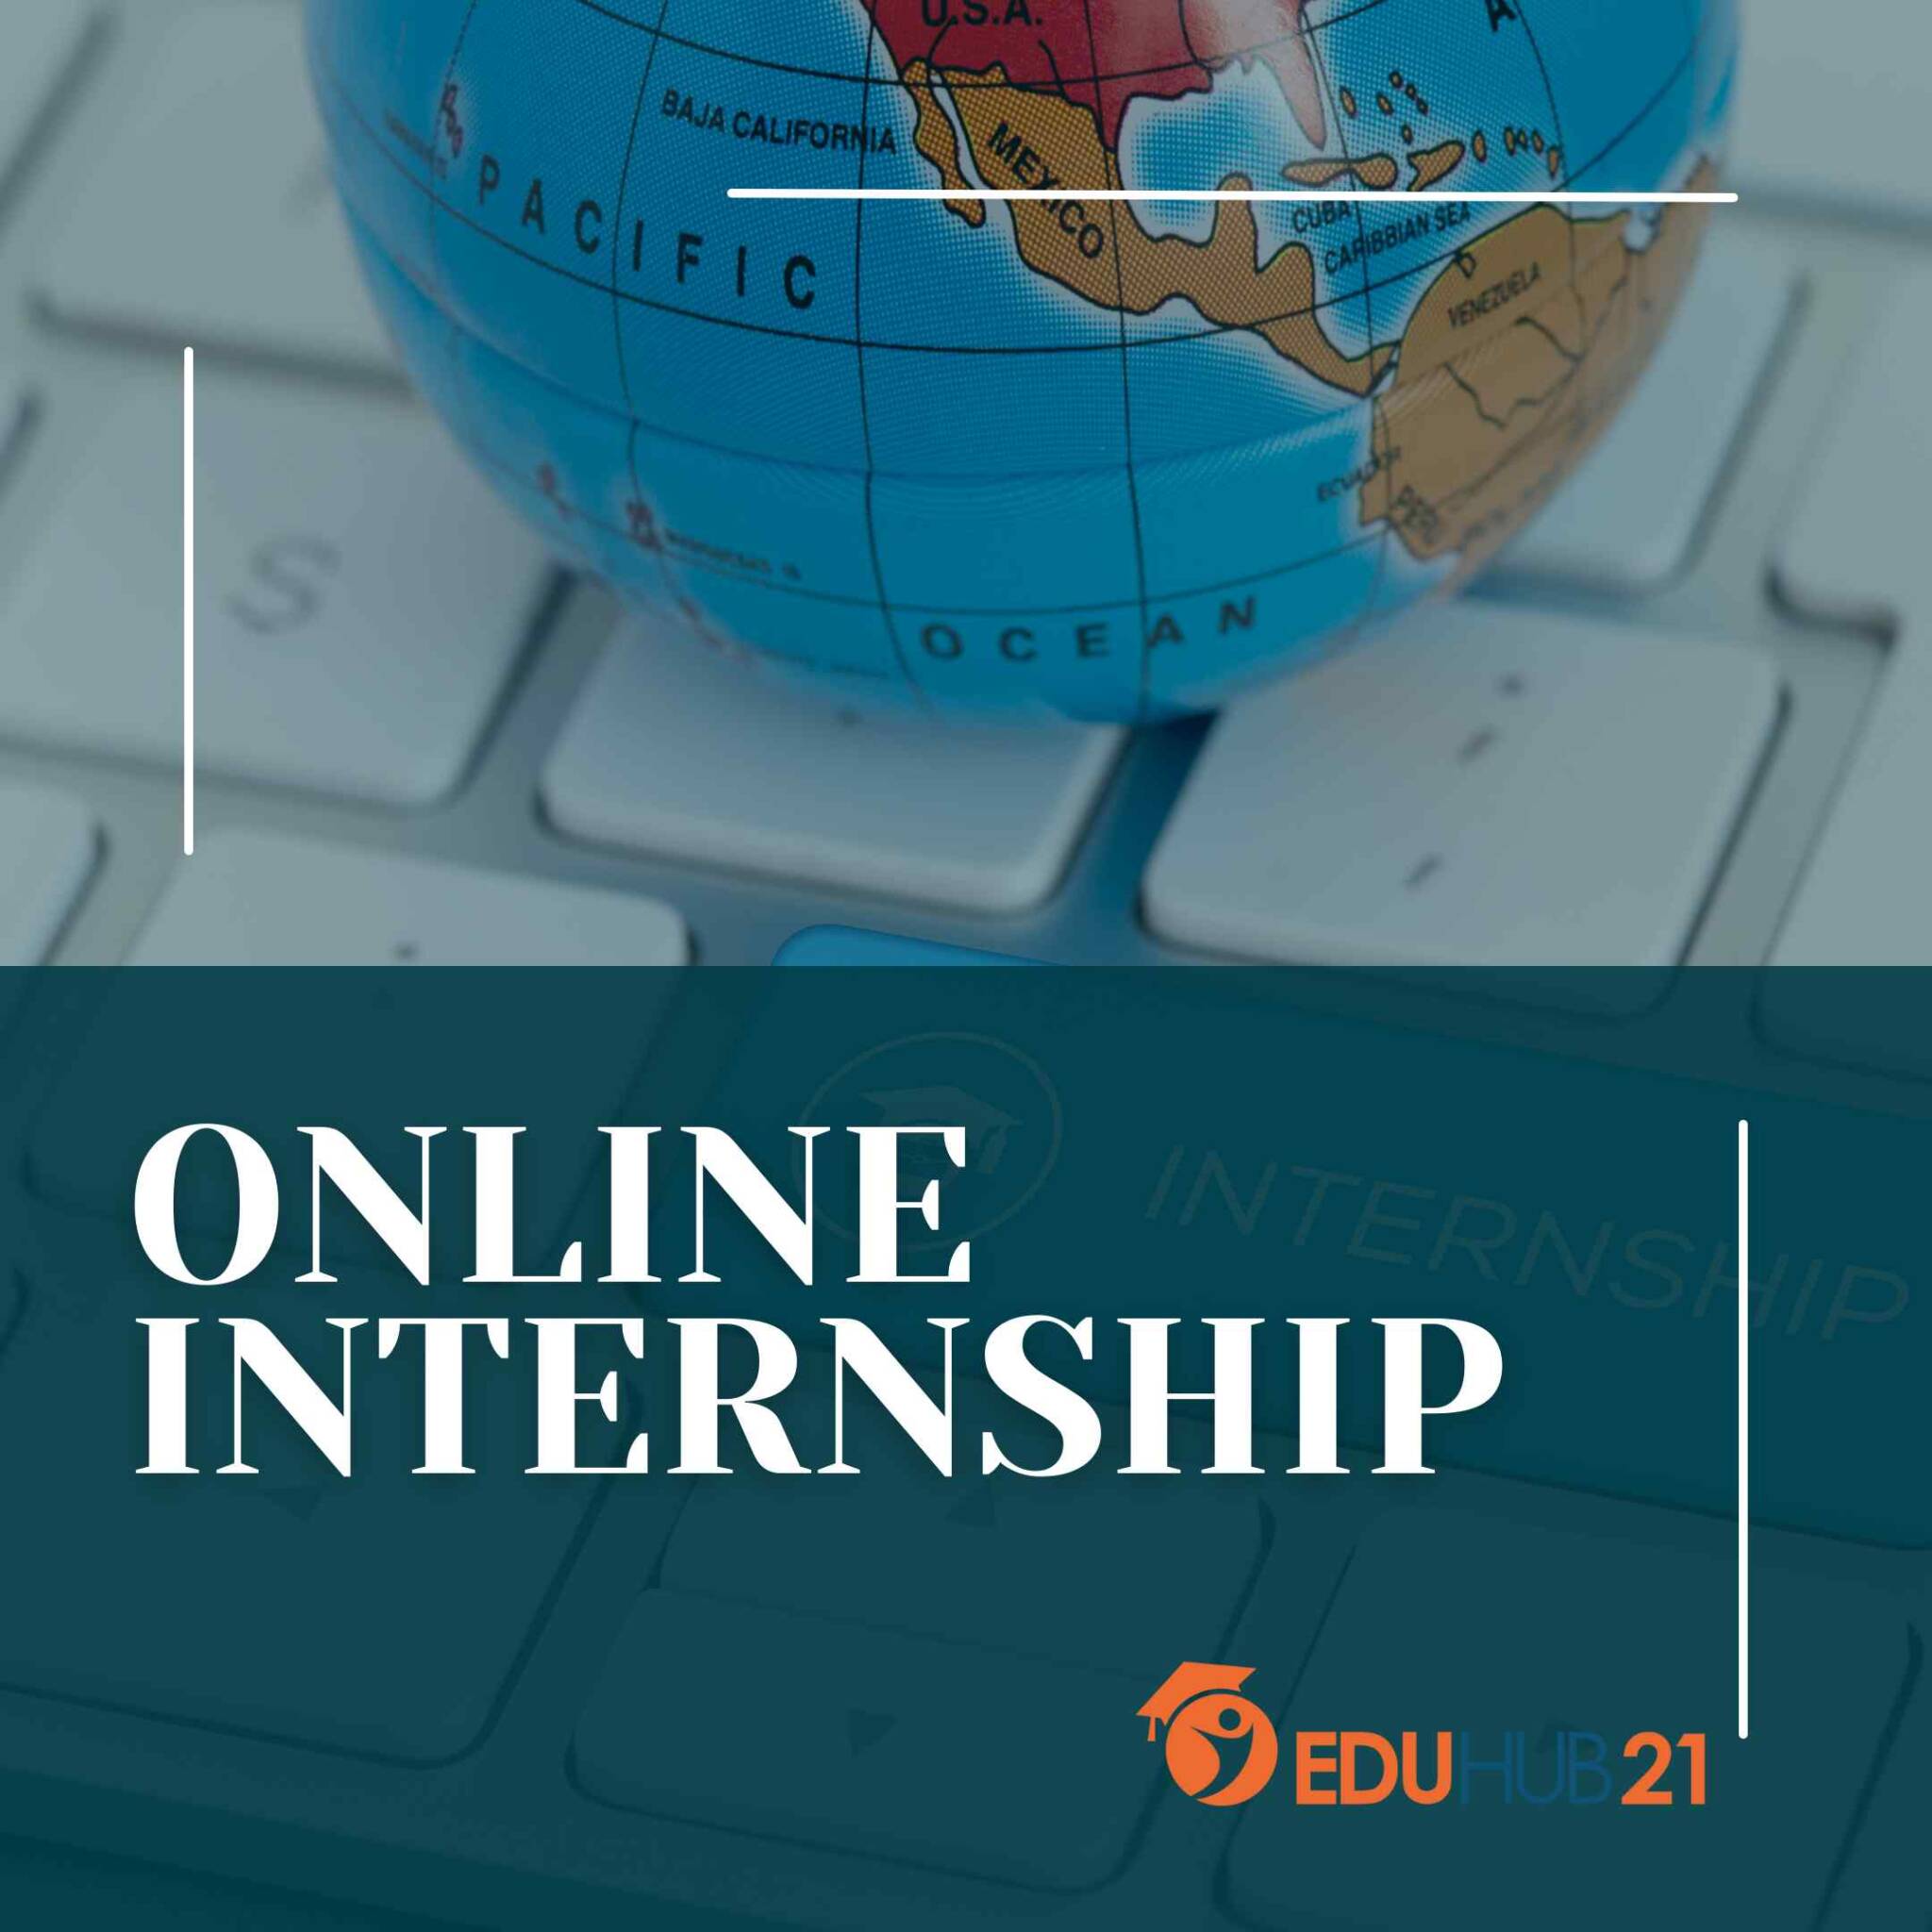 Remote internship with a salary Eduhub21